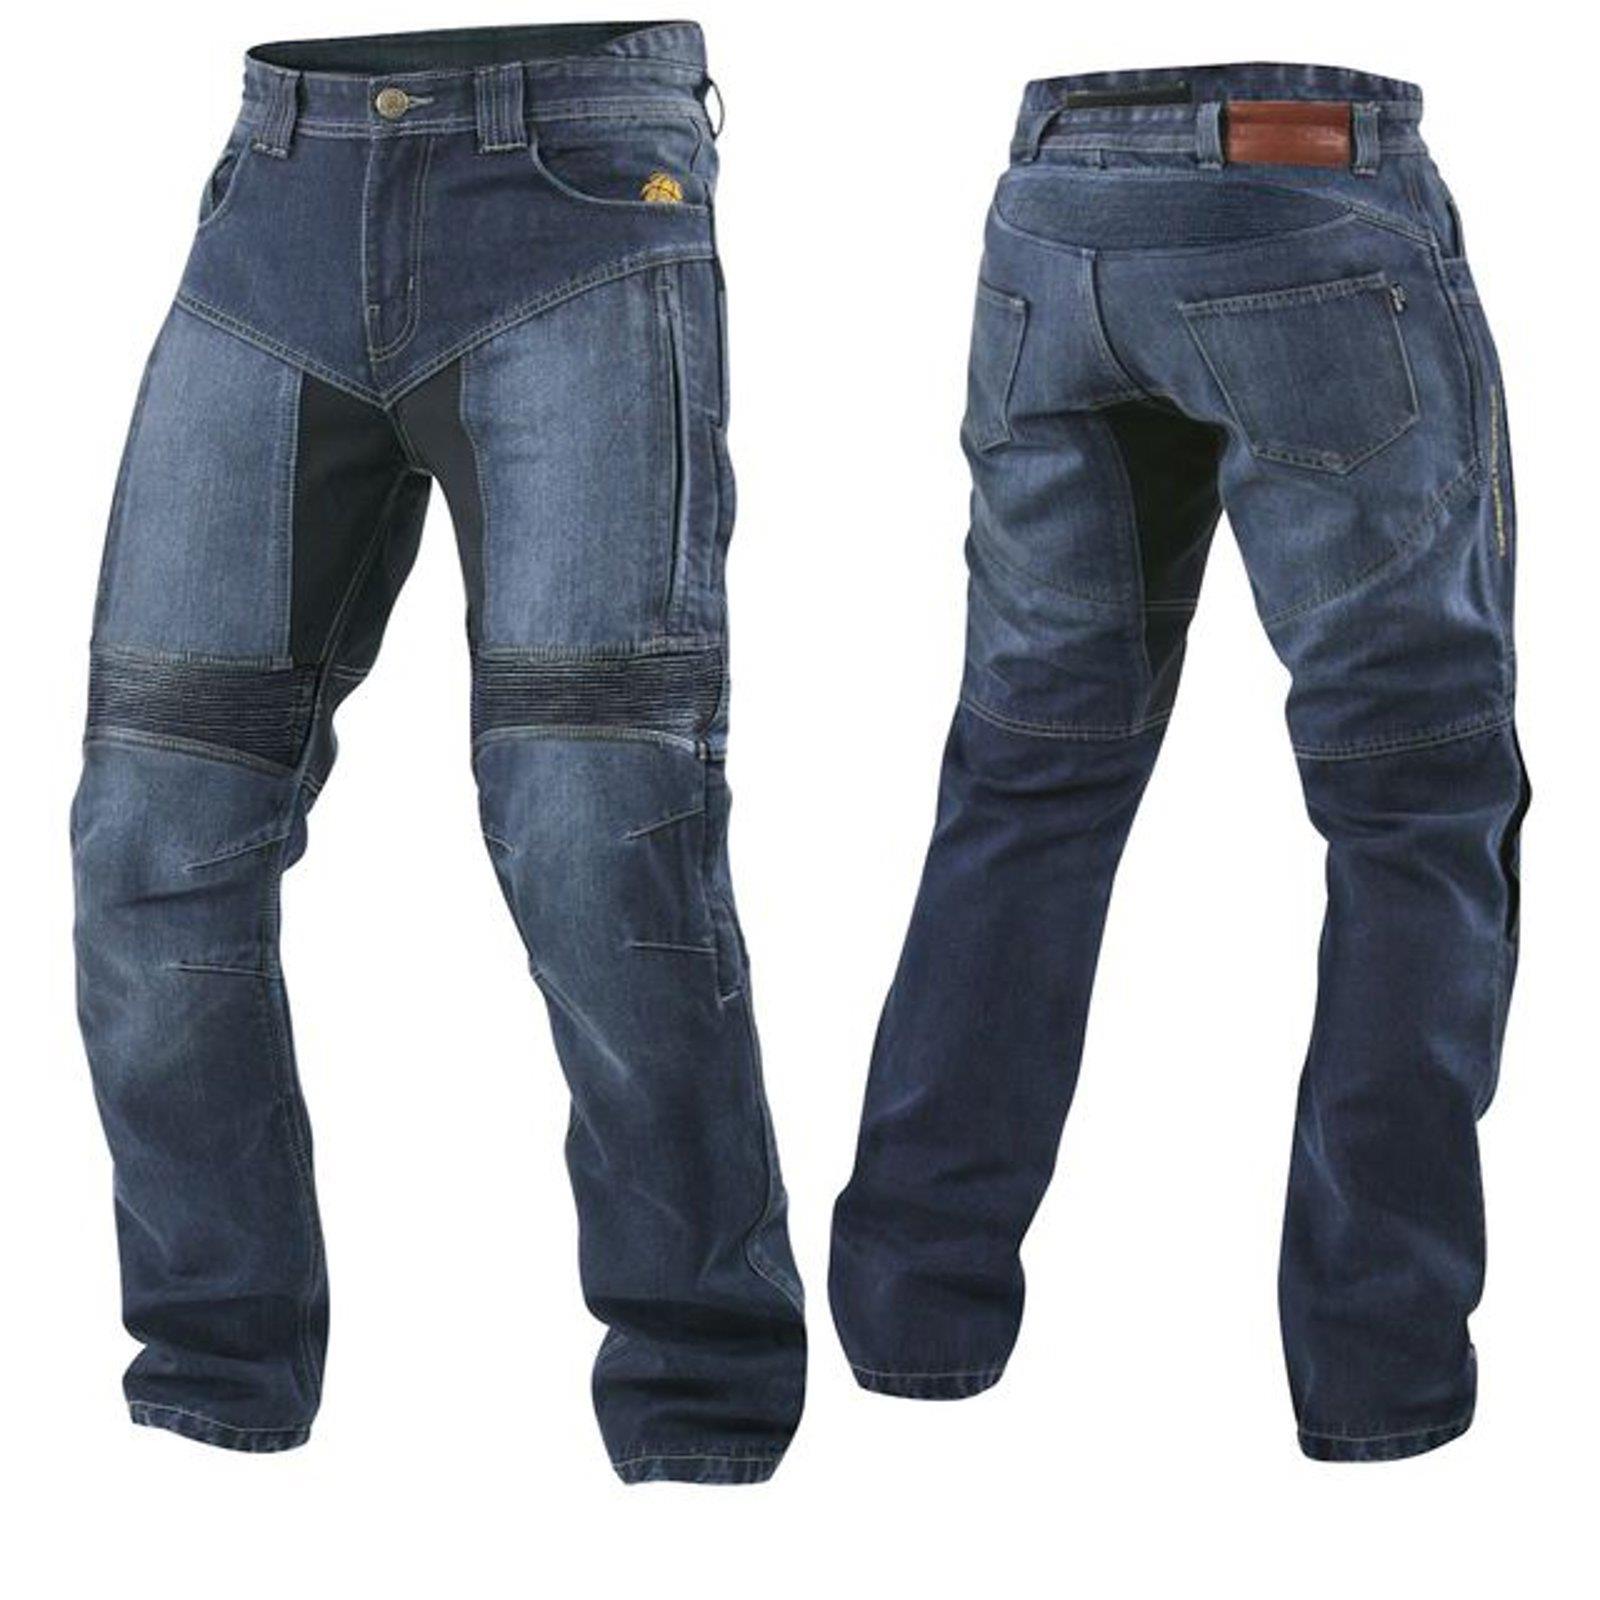 Trilobite Smart Jeans Herren Motorrad Hose Blau Protektor Länge 32 Tragekomfort 